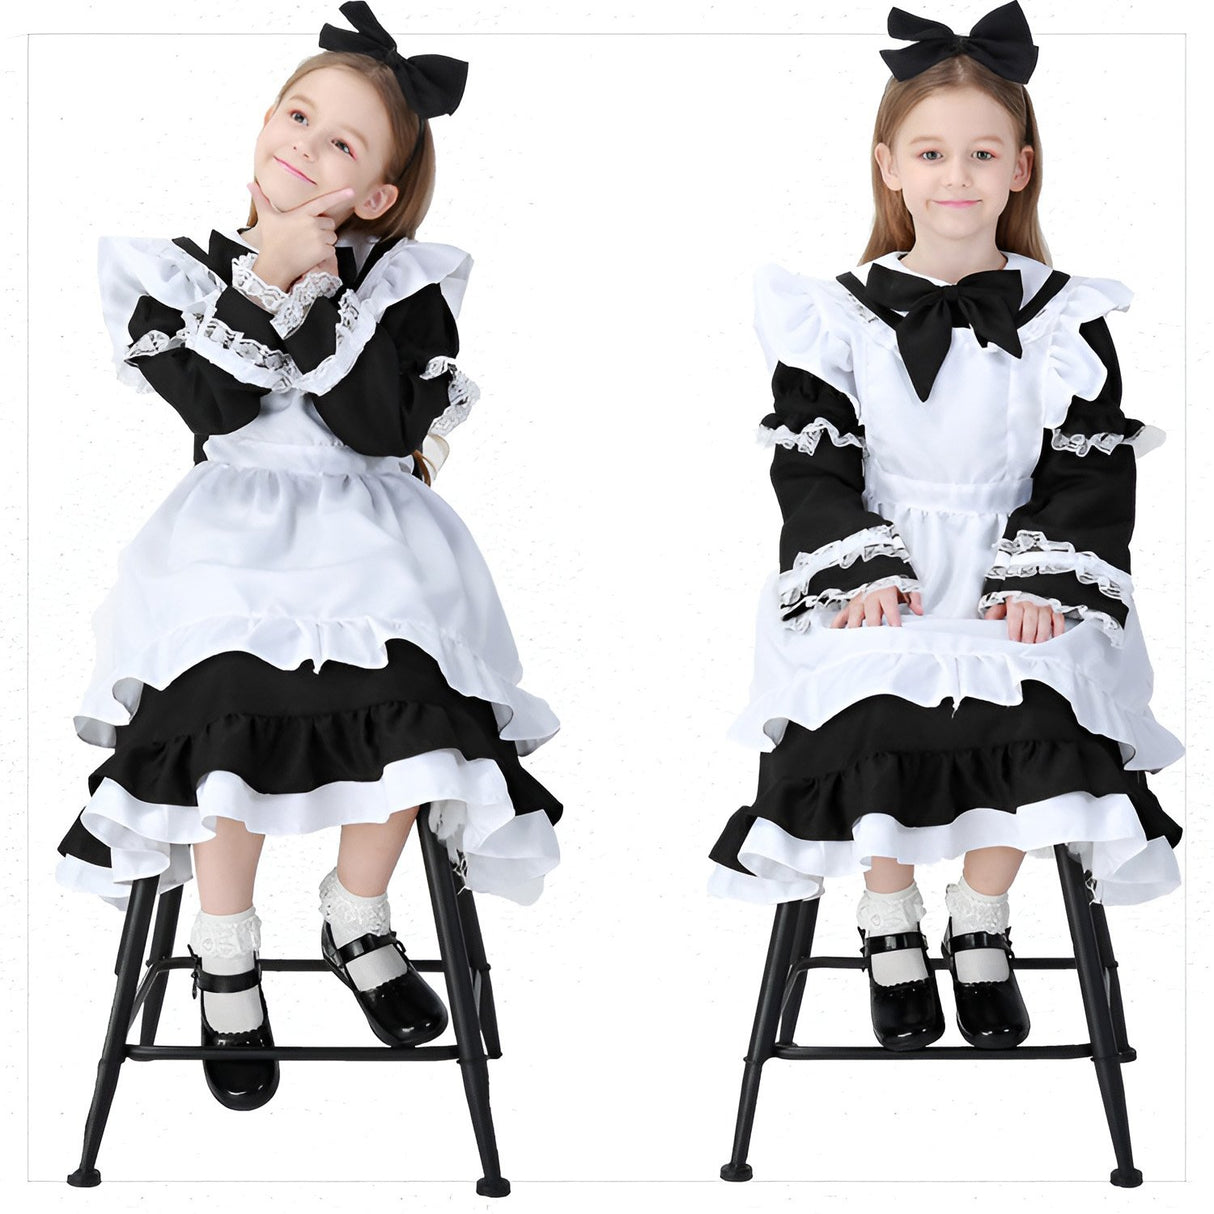 Alice-Inspired Maid Kid‘s Costume